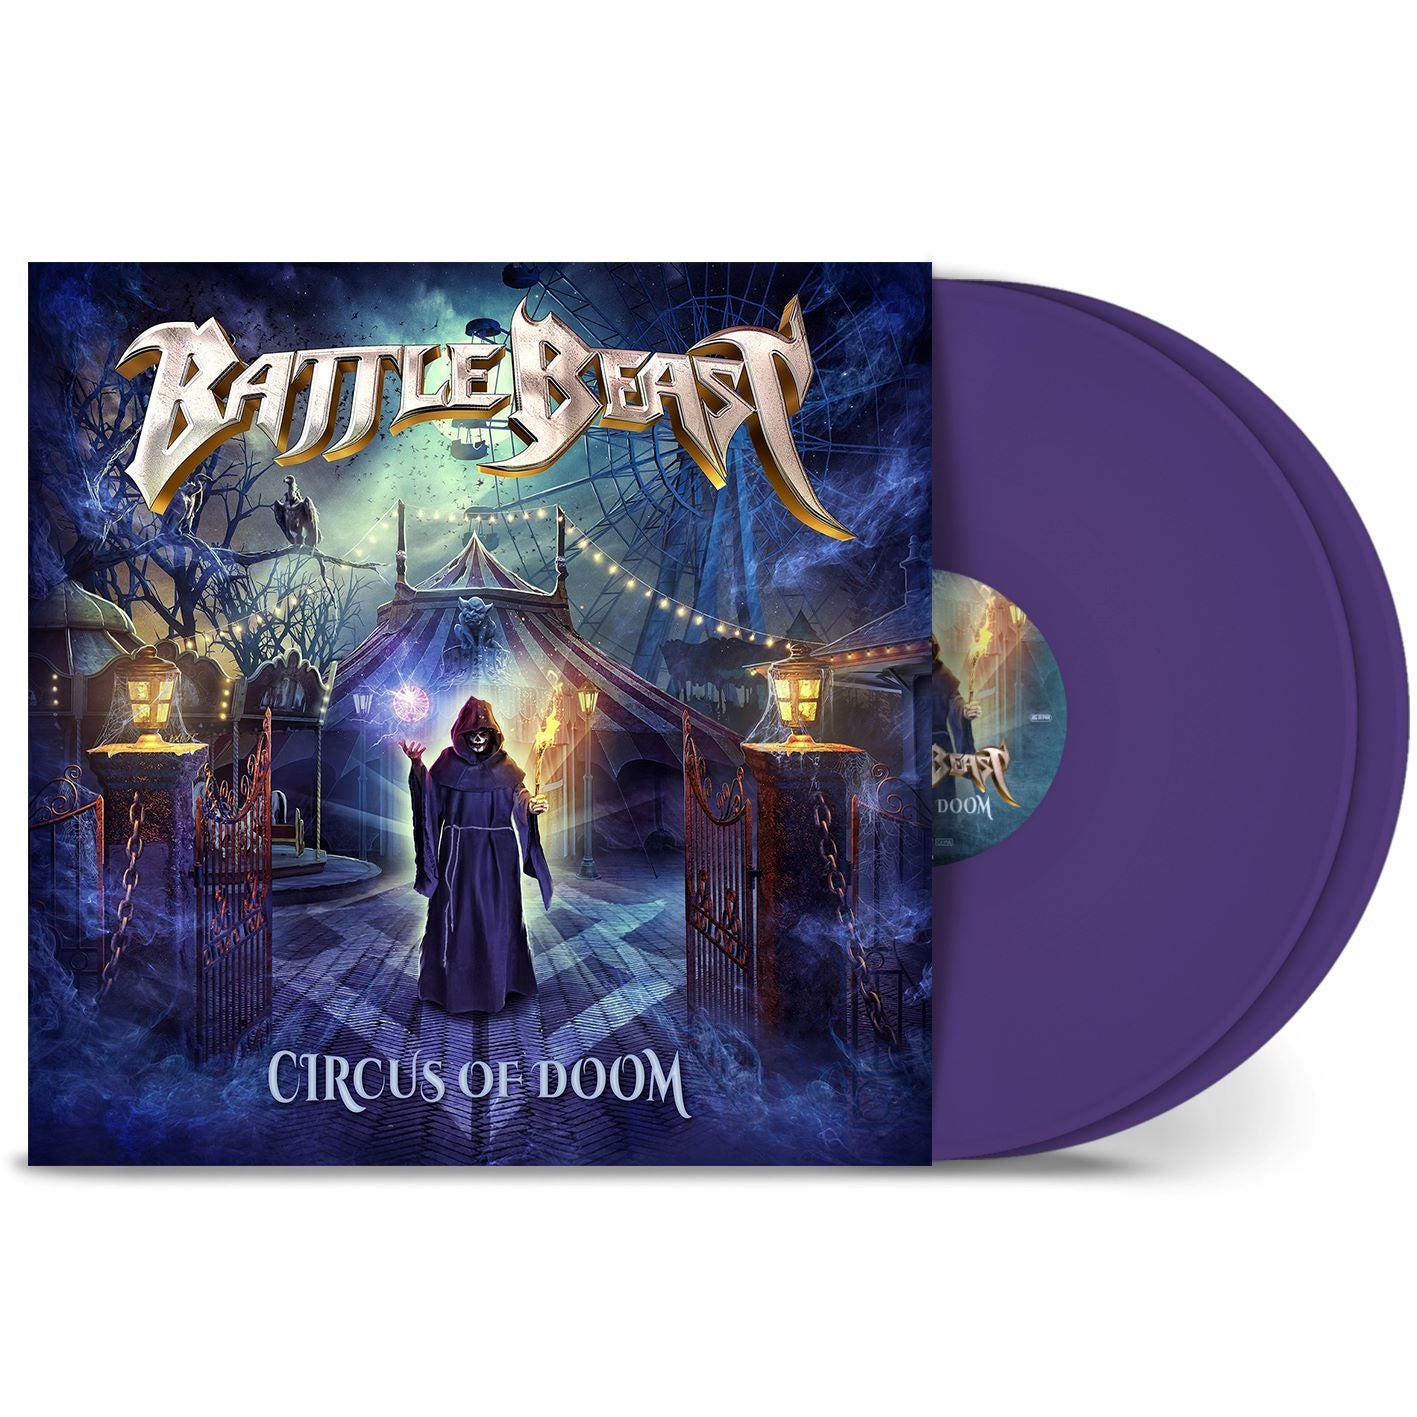 Battle Beast "Circus Of Doom" 2x12" Purple Vinyl